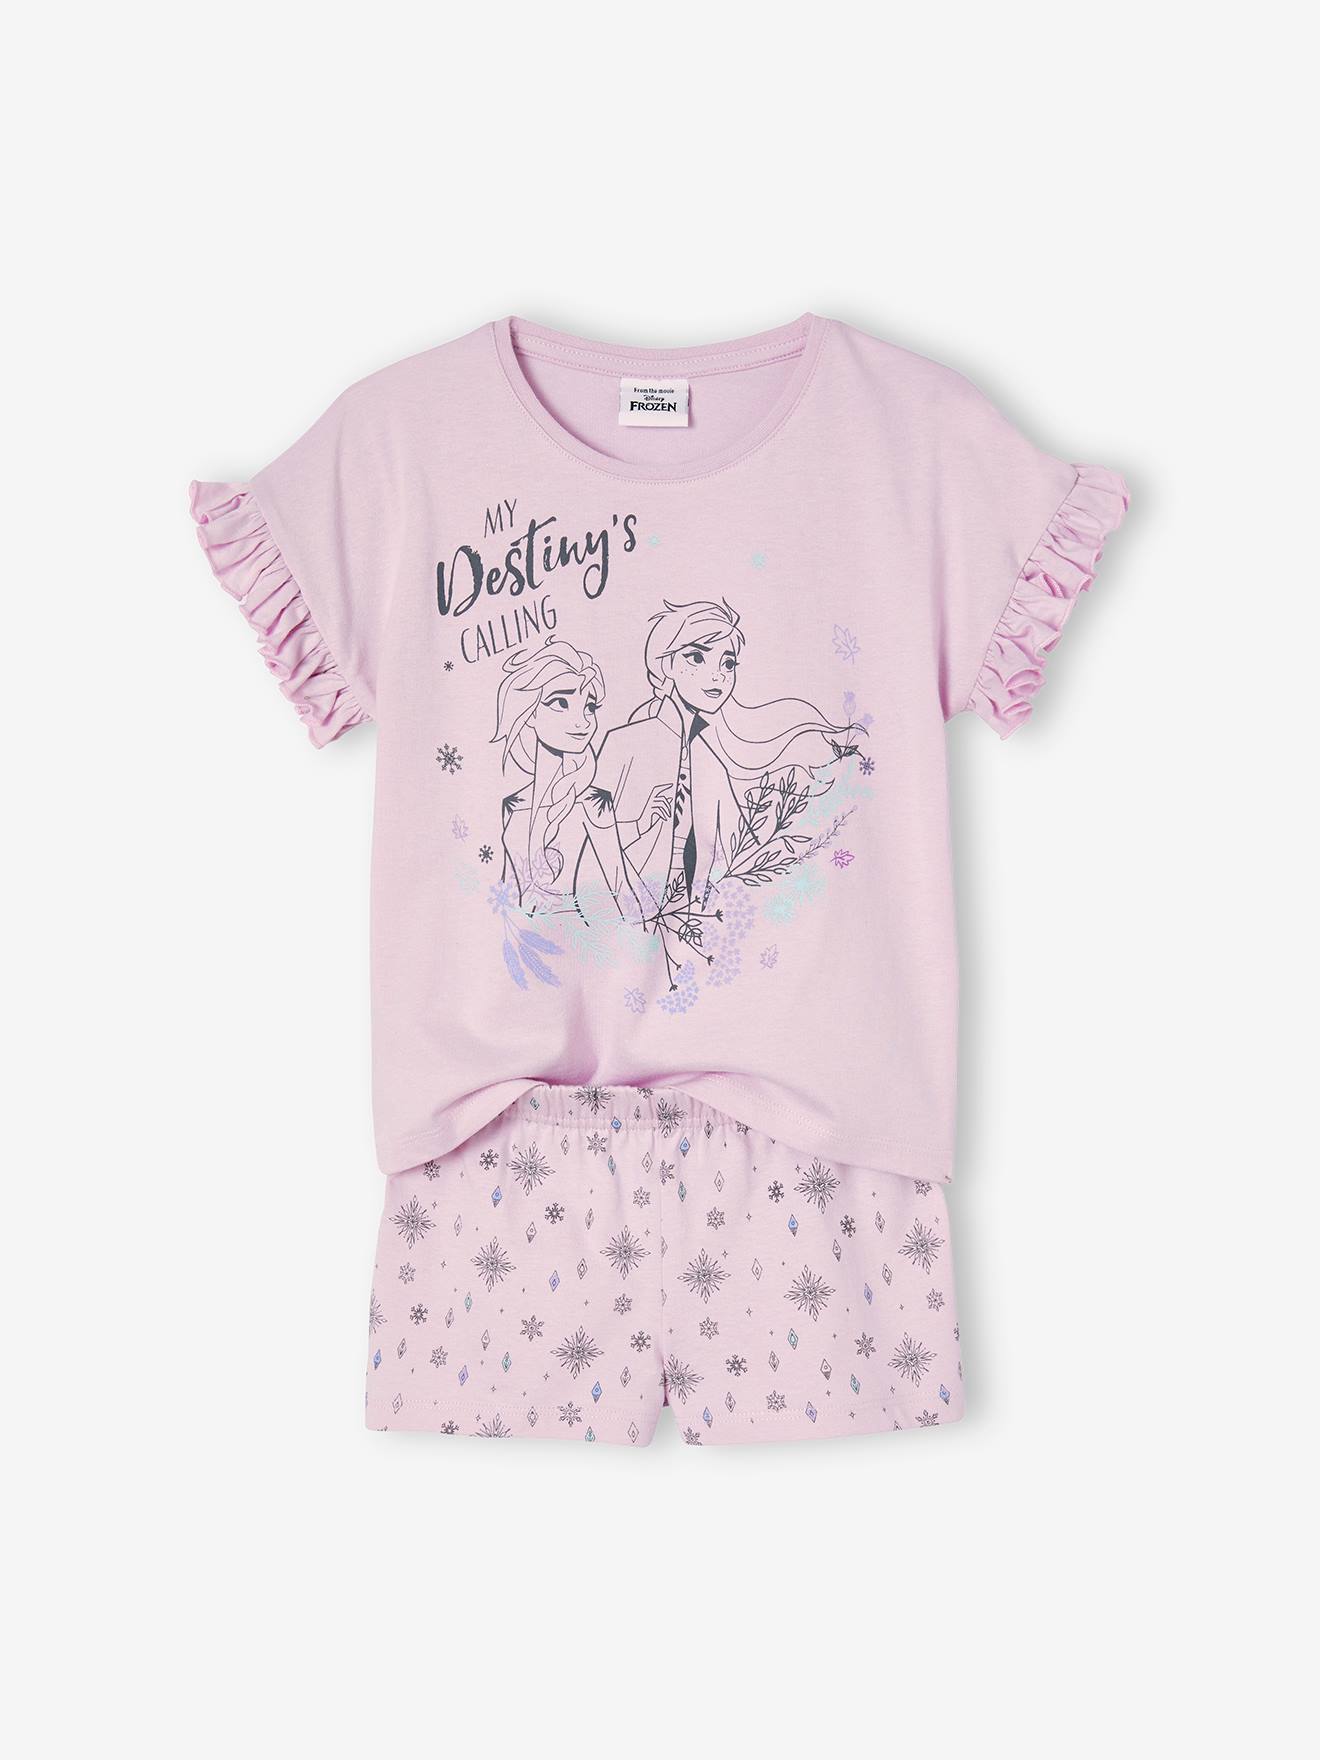 Frozen 2 Pyjamas by Disney(r) for Girls